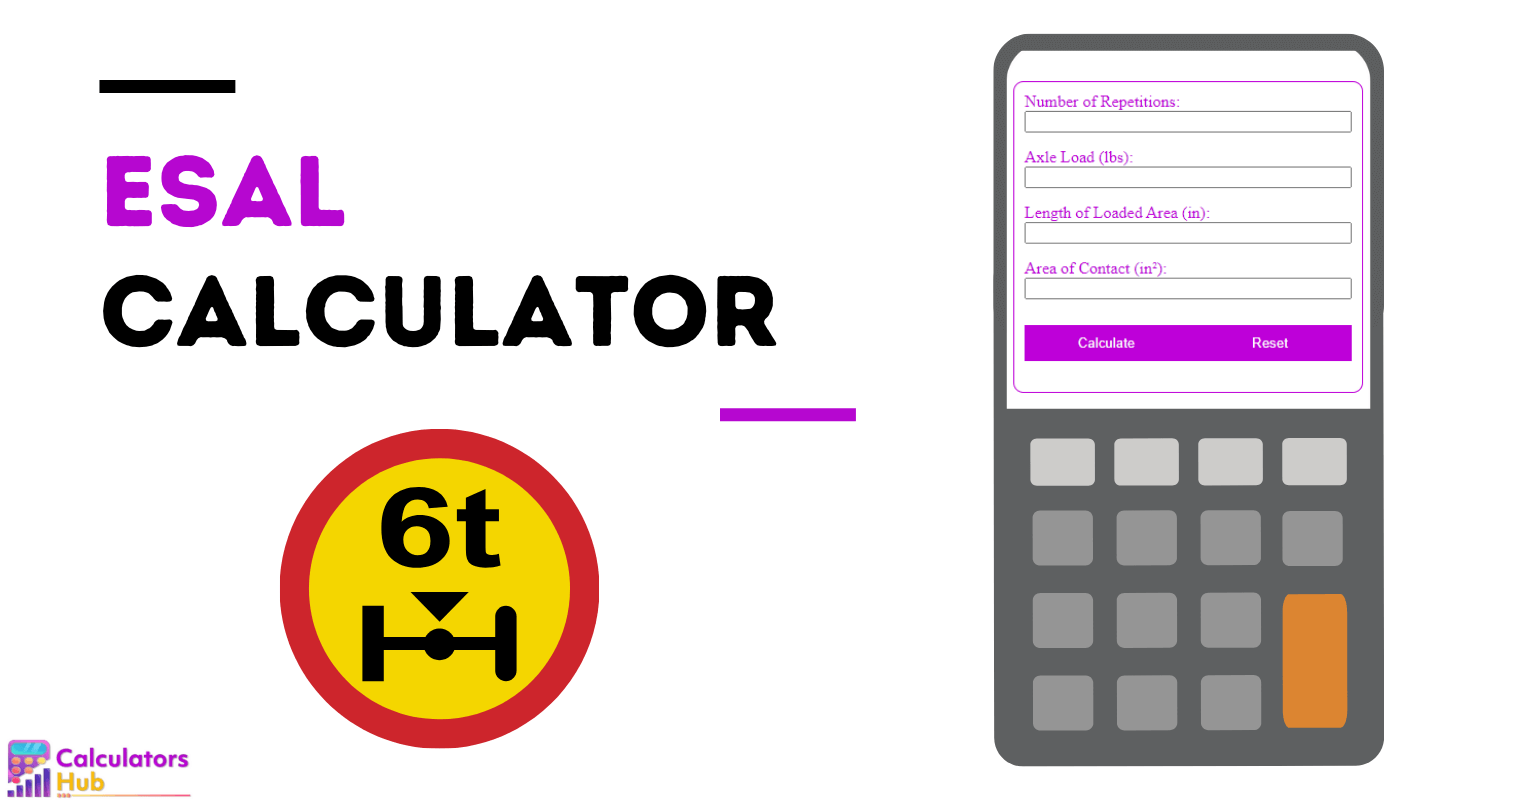 ESAL Calculator